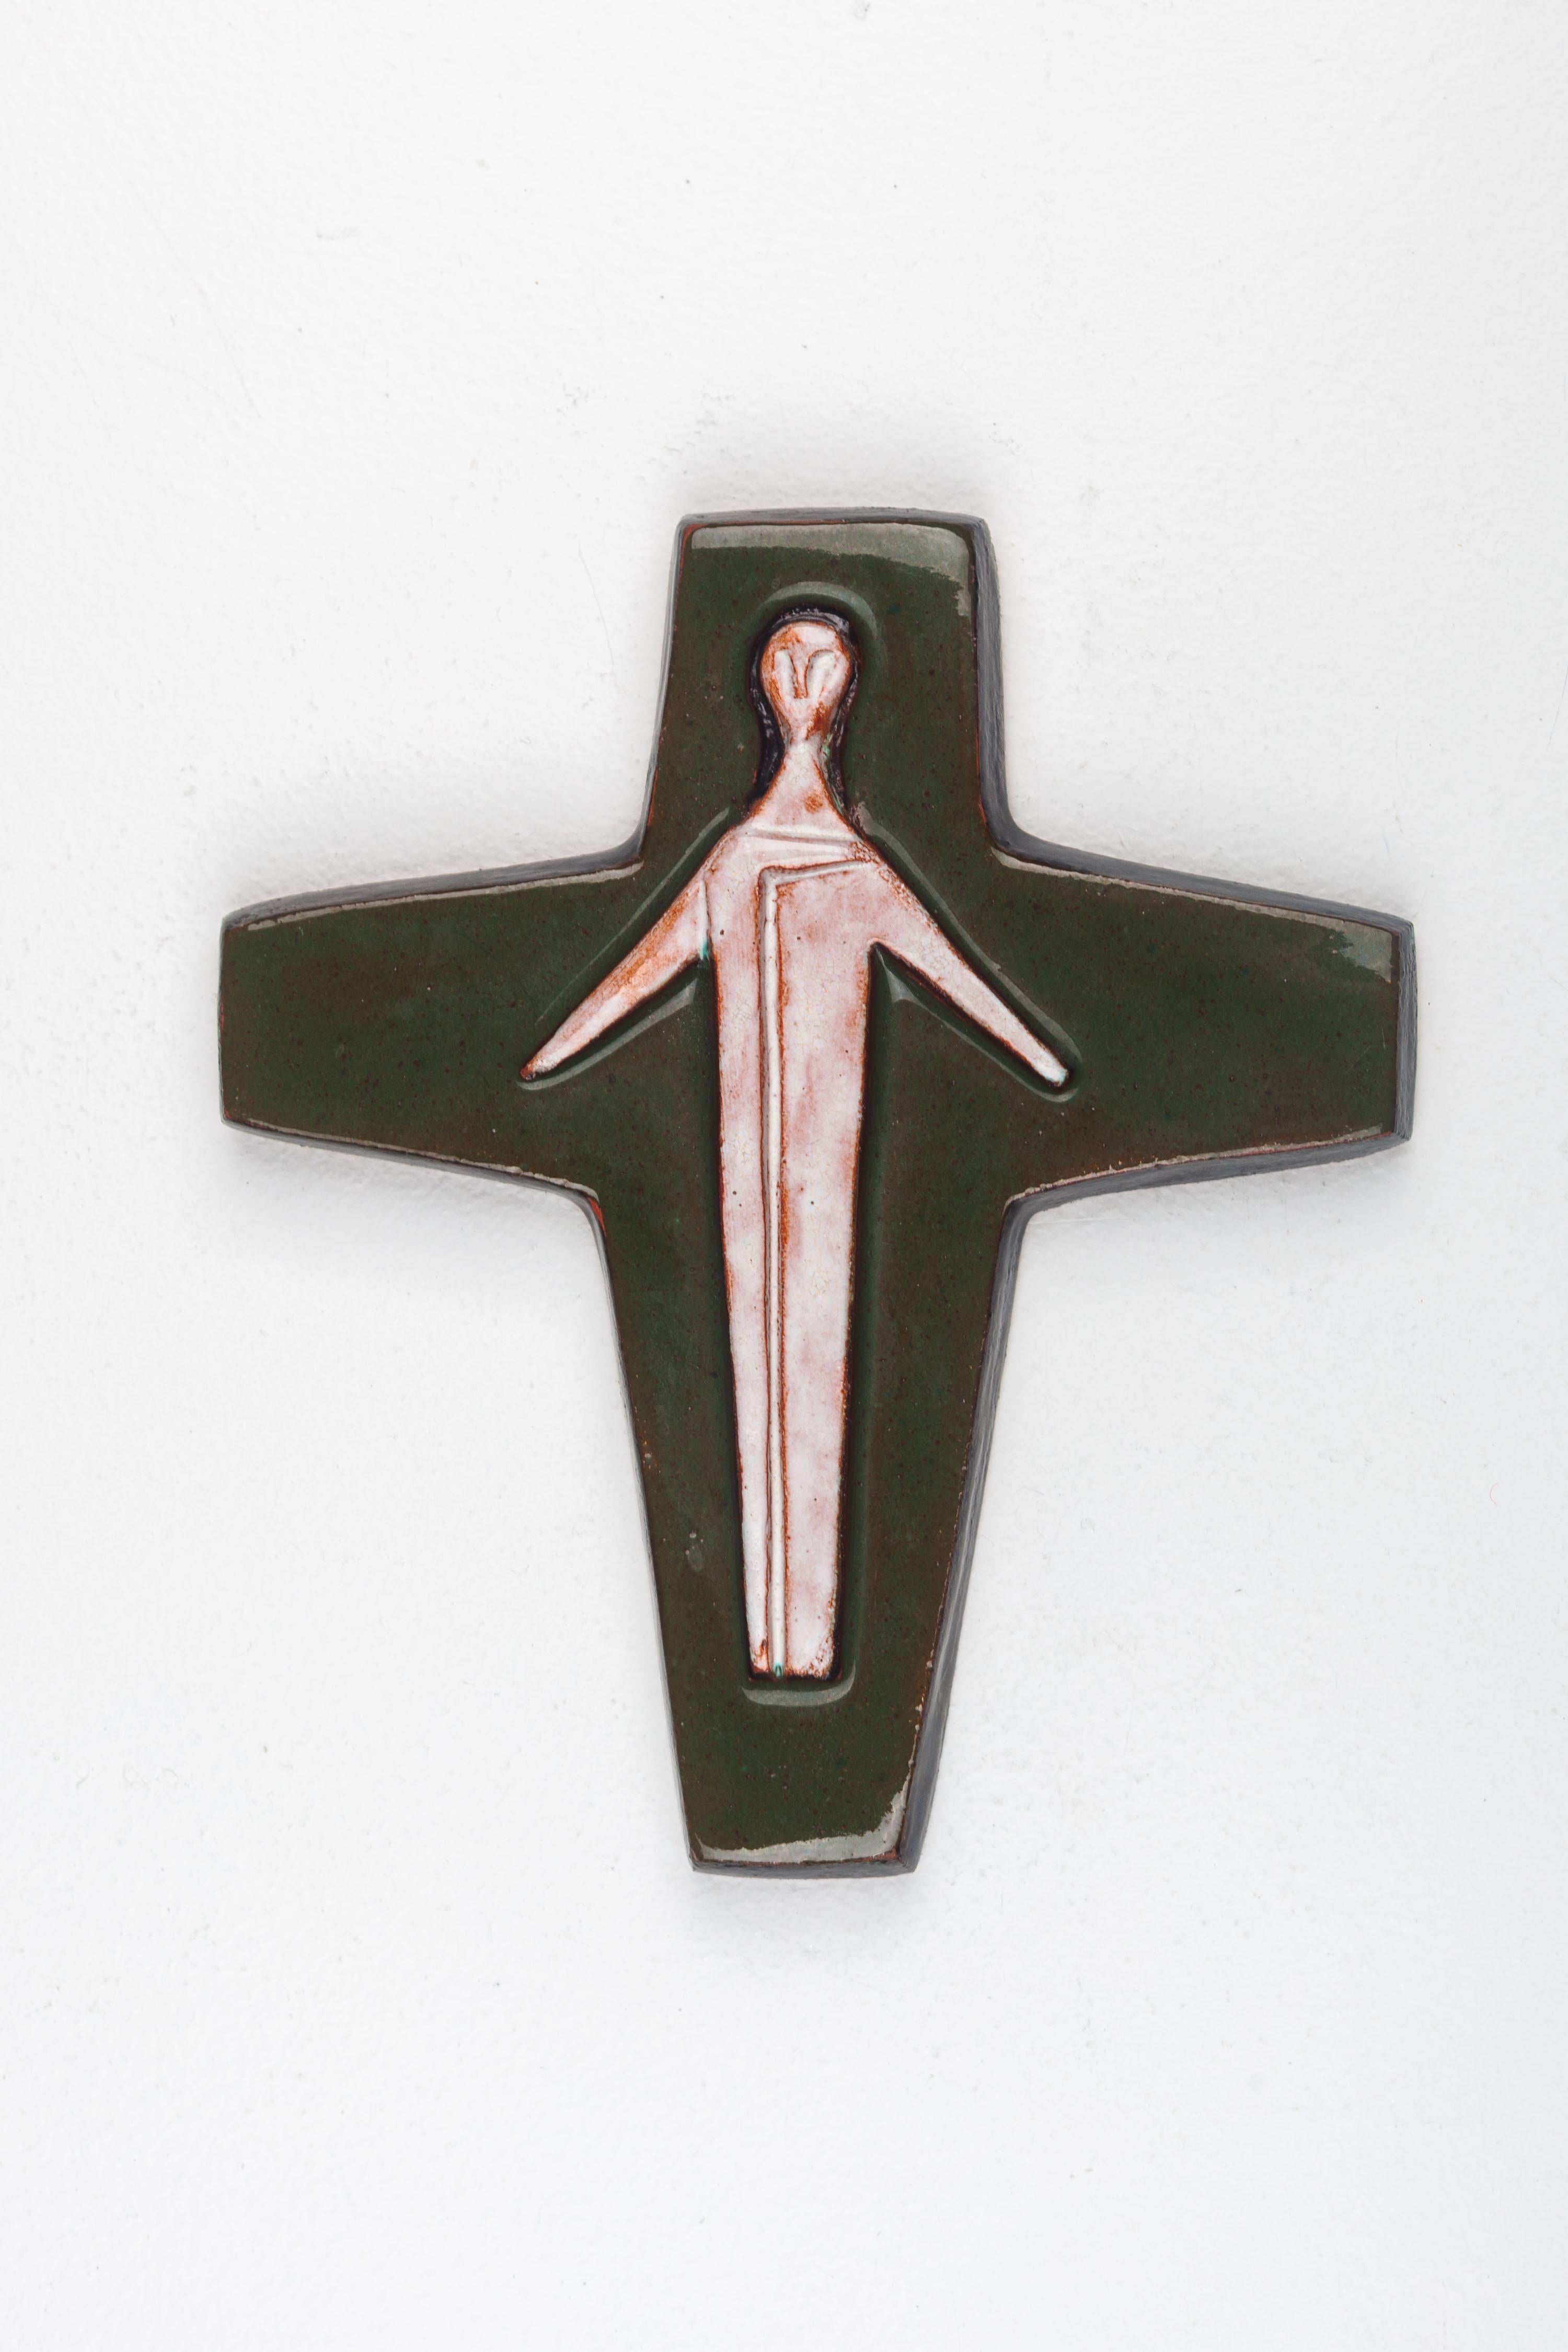 Midcentury European Glossy Ceramic Cross - Otherworldly Christ Figure